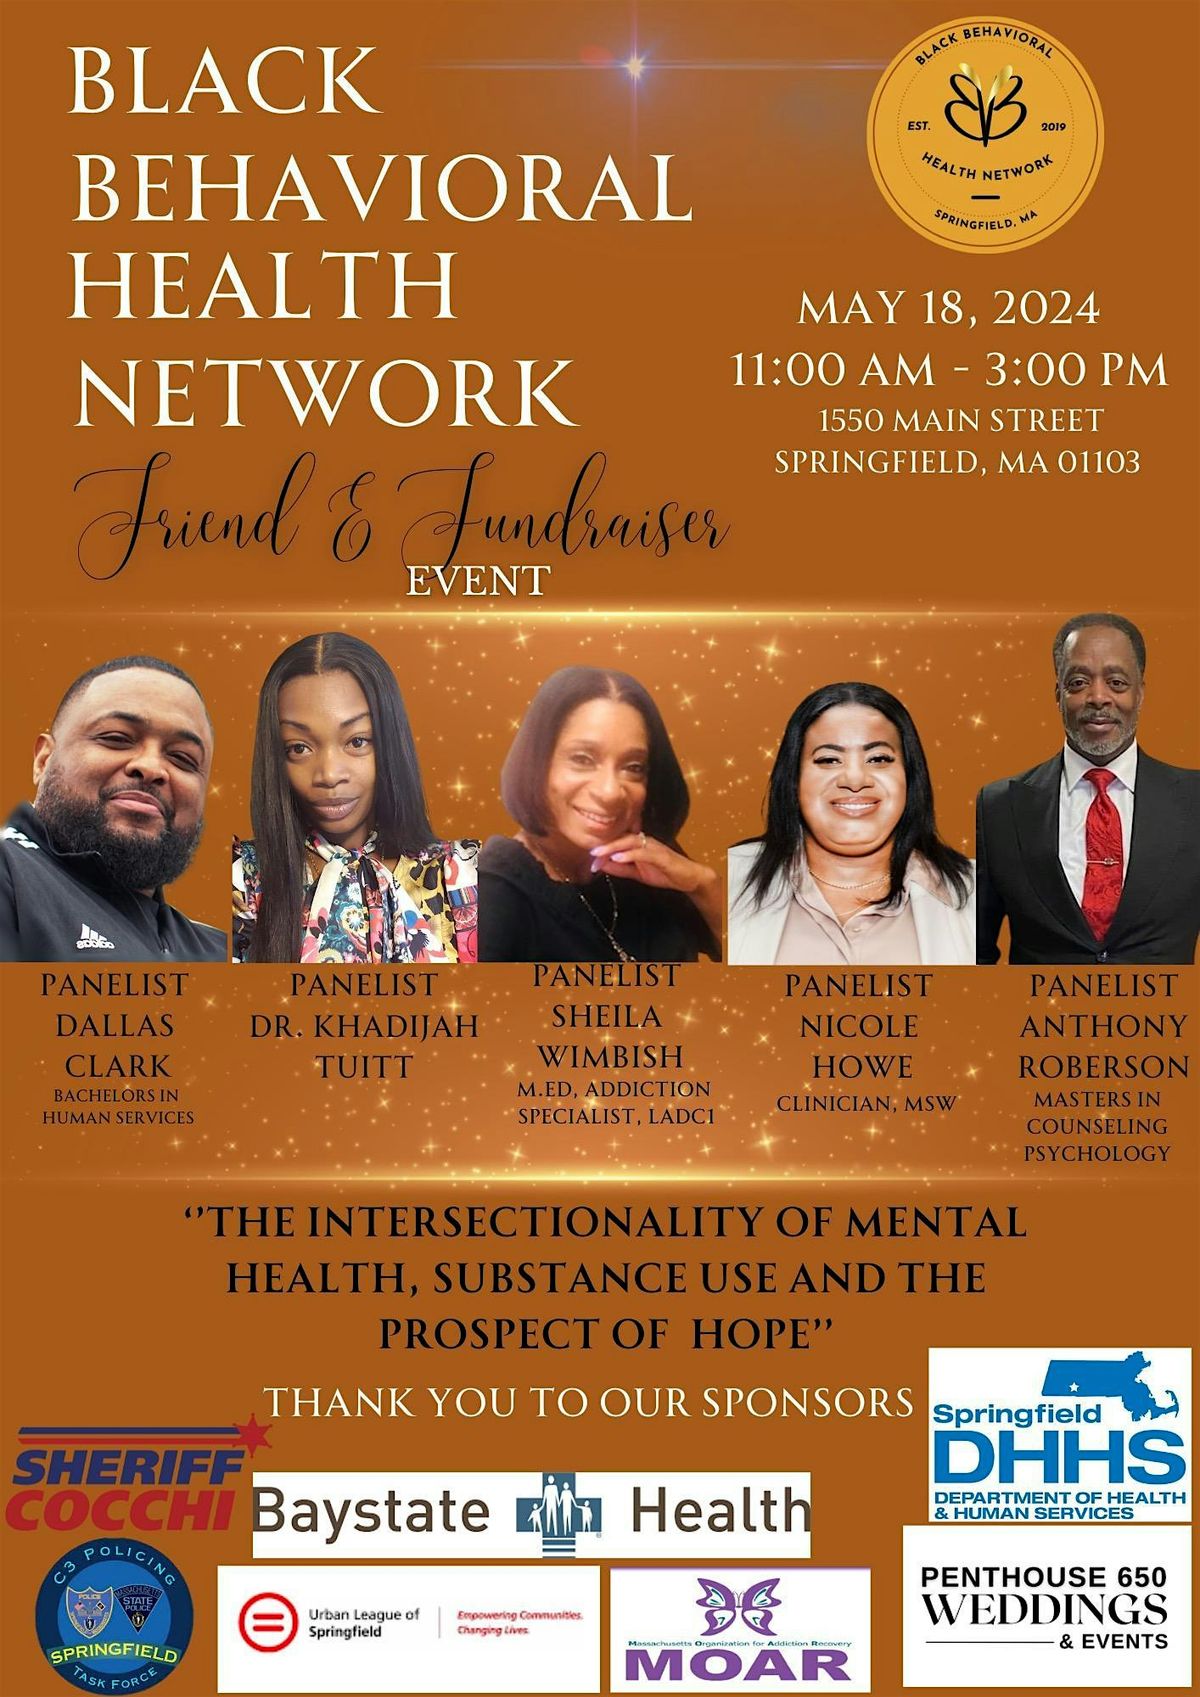 Black Behavioral Health Network Friend & Fundraiser Event